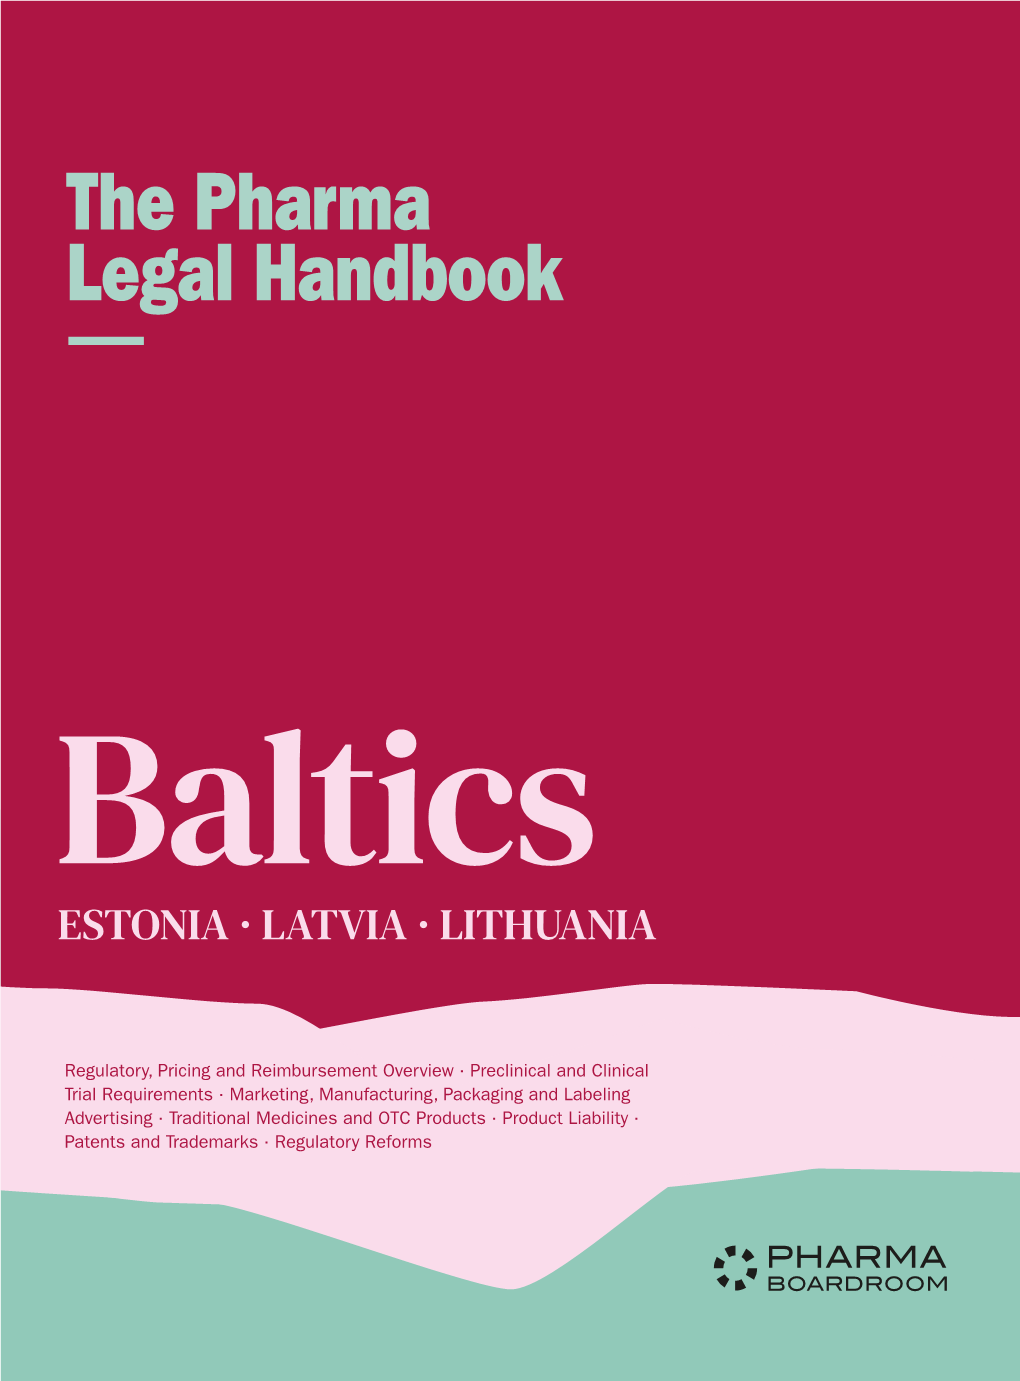 Estonia · Latvia · Lithuania